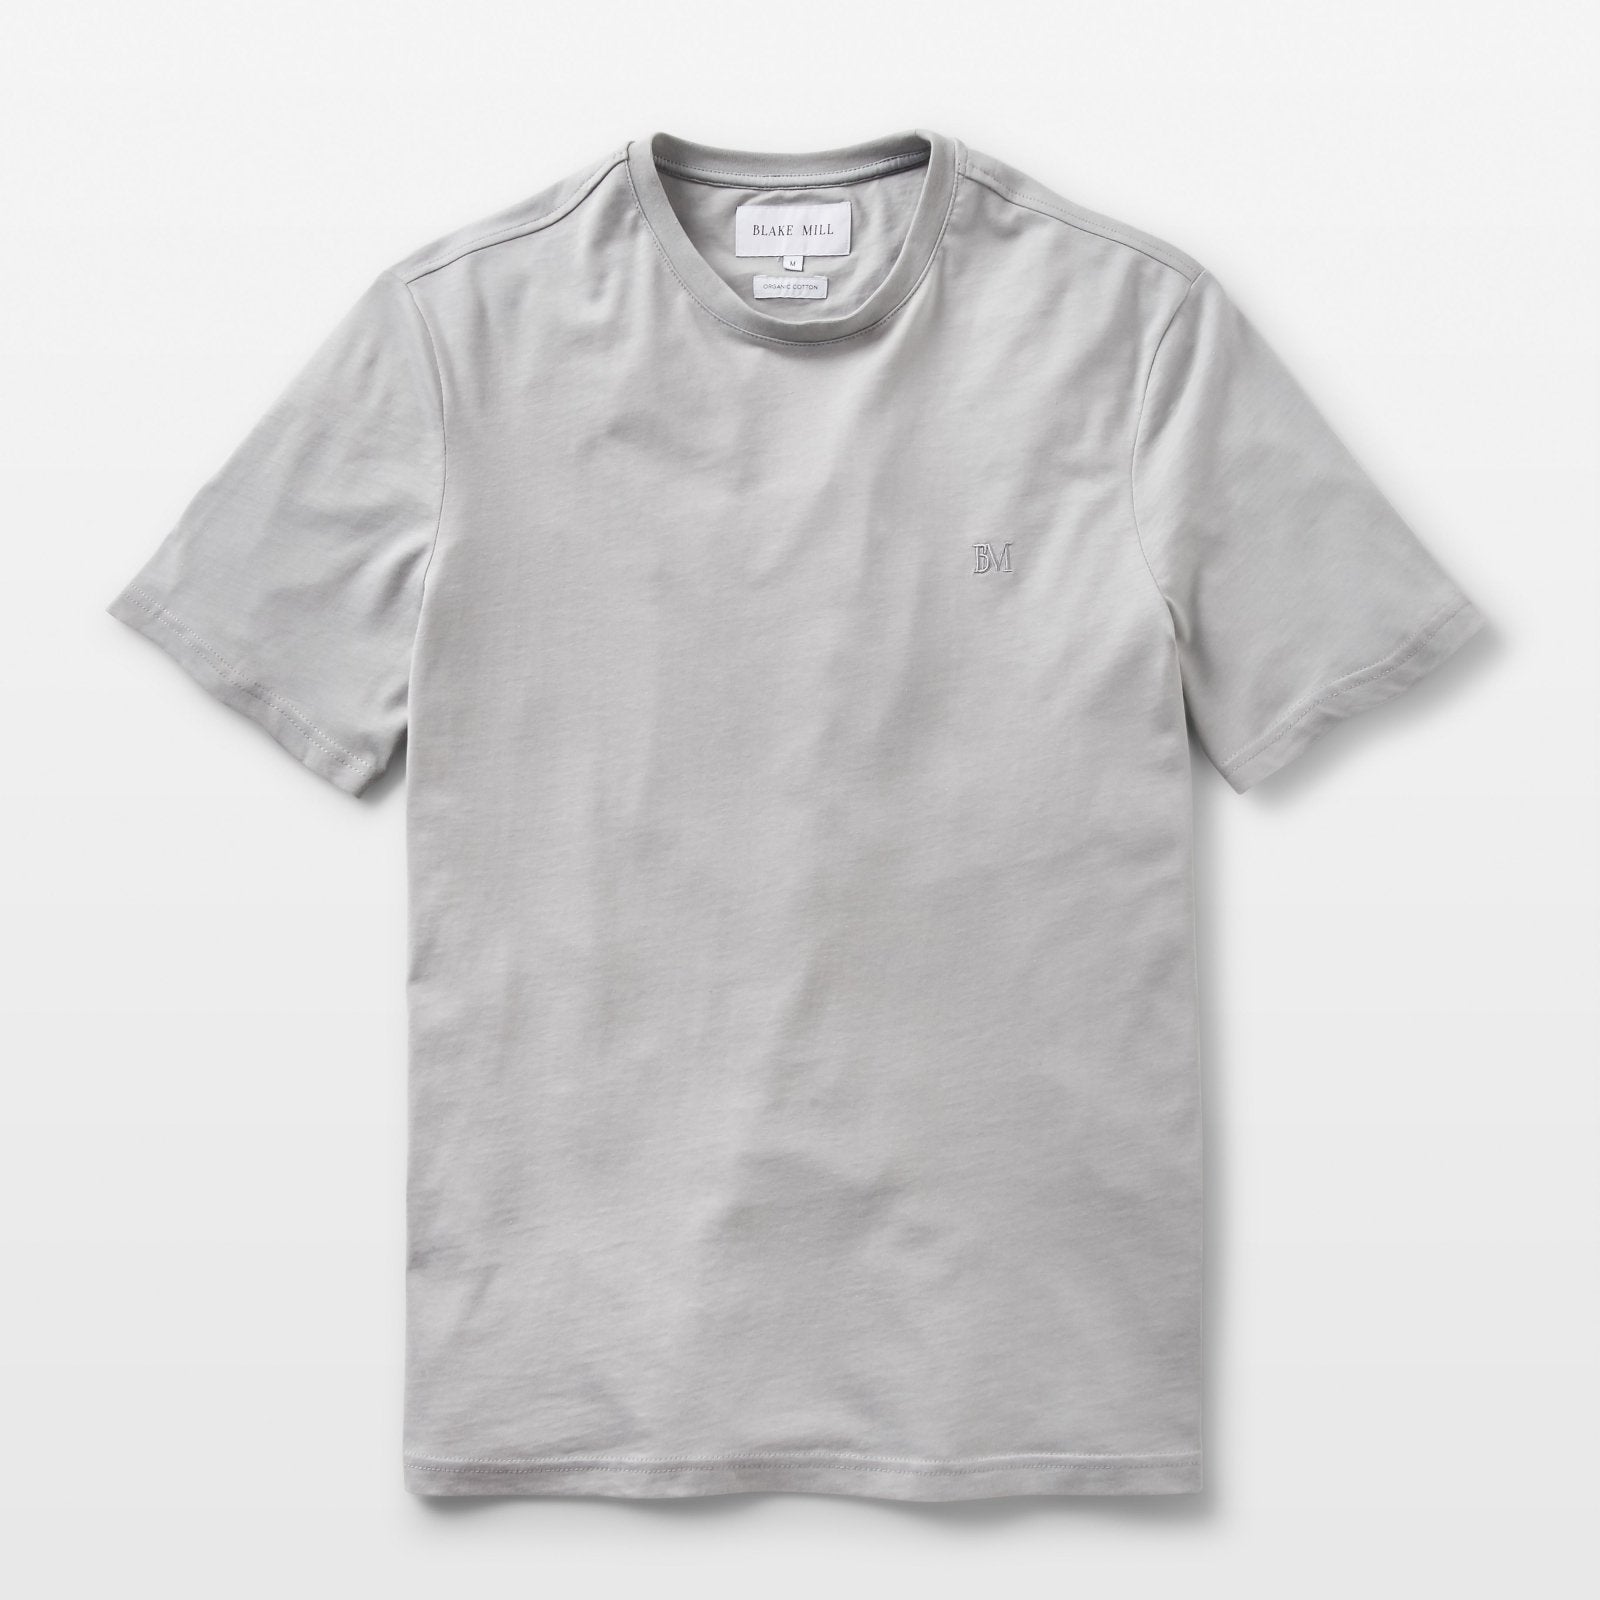 Mid Grey Organic Cotton T-Shirt - Blake Mill